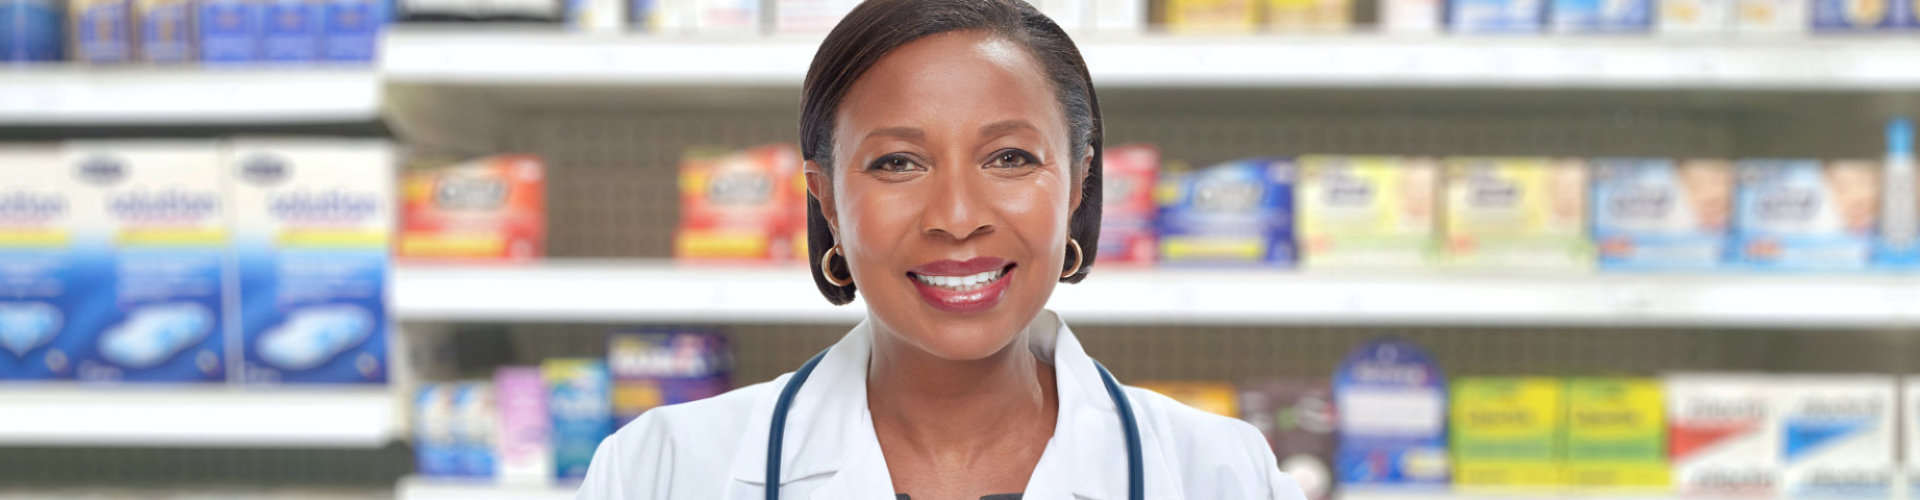 female pharmacist wearing stethoscope smiling